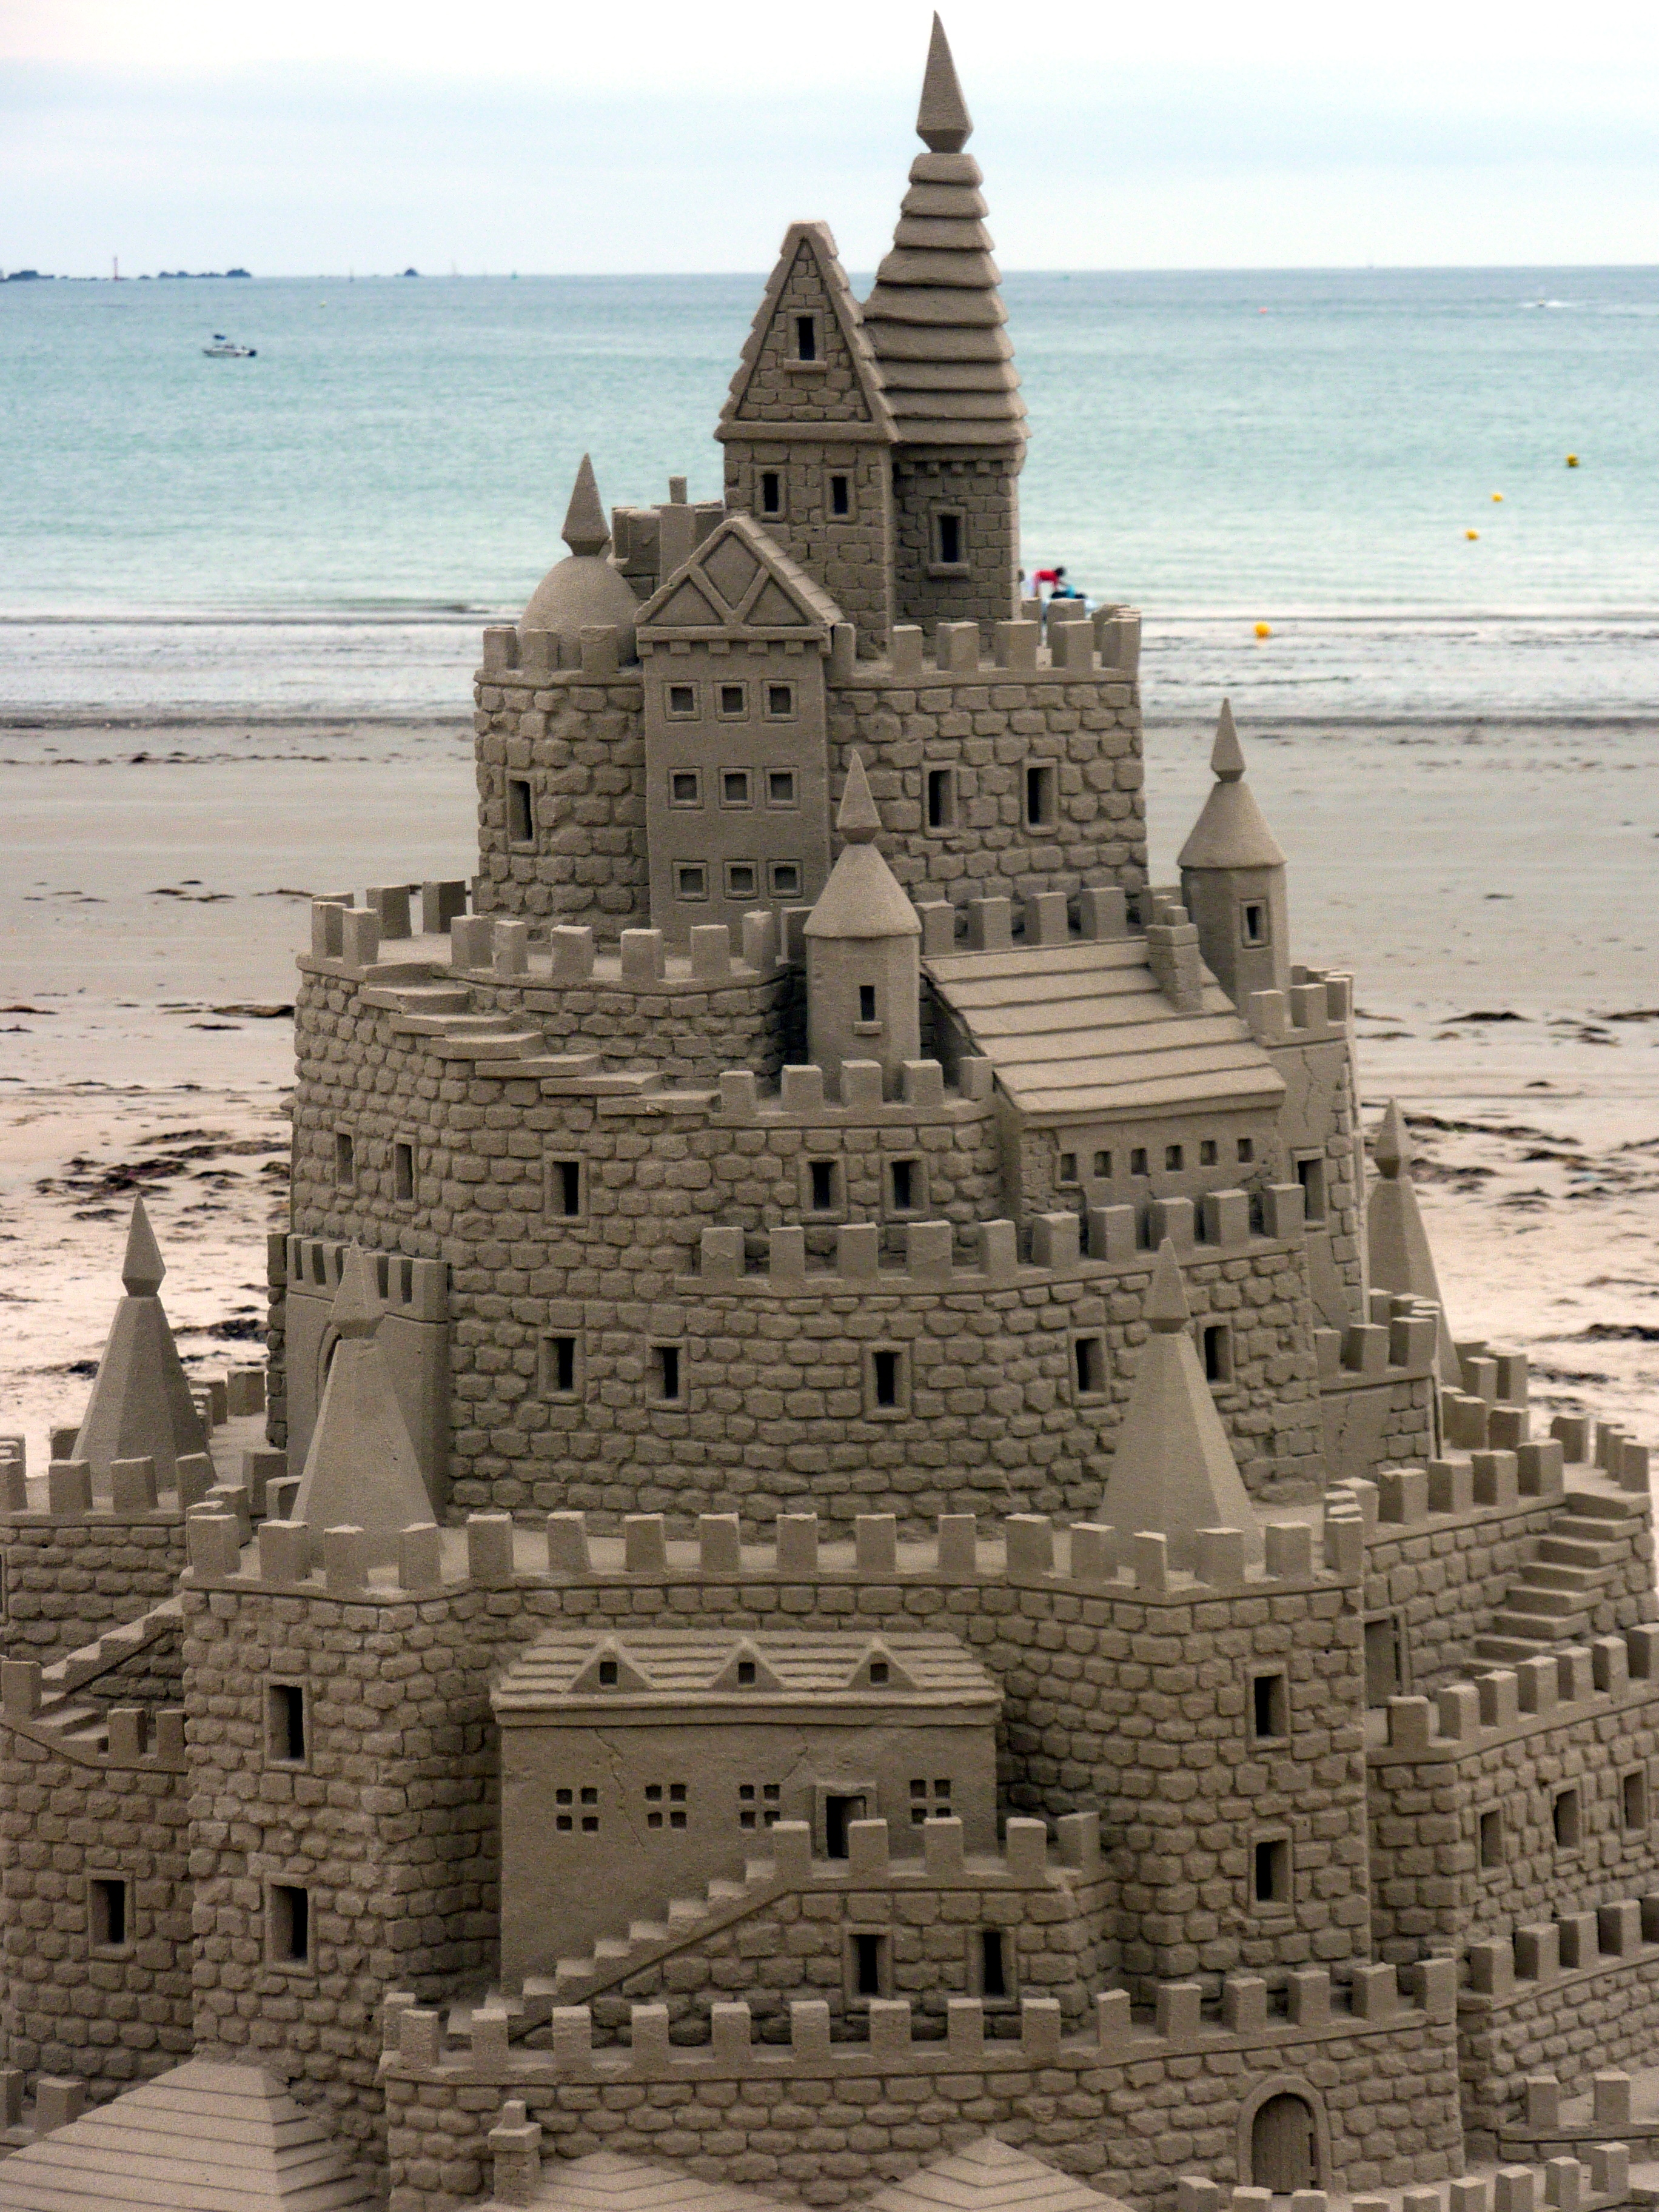 File:Sandcastle sculpture (4856466479).jpg - Wikimedia Commons